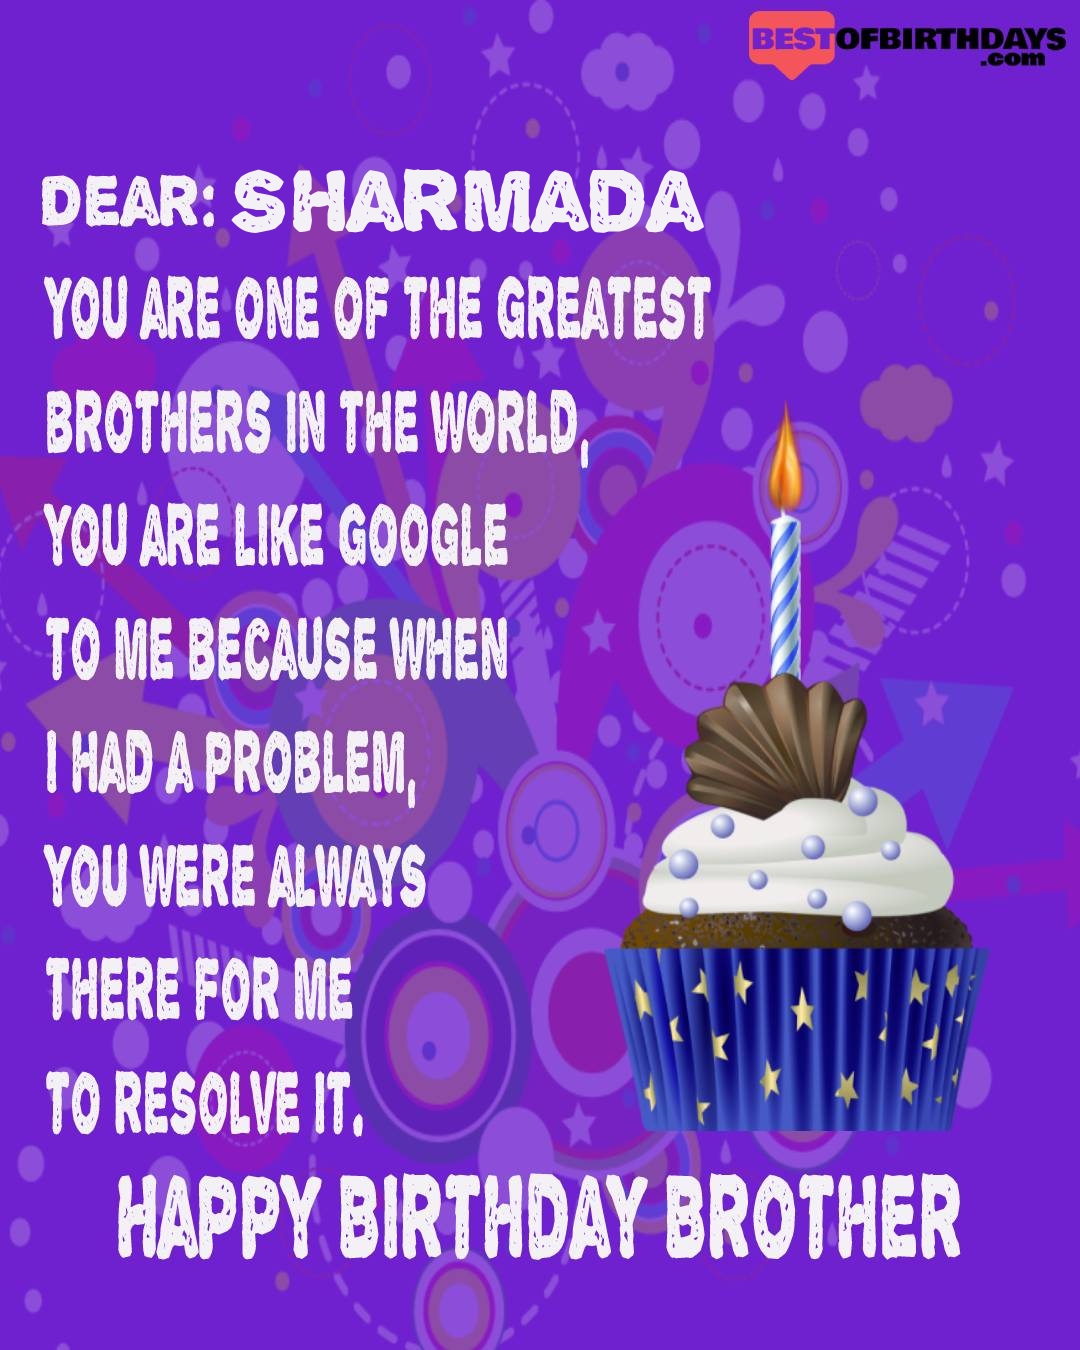 Happy birthday sharmada bhai brother bro